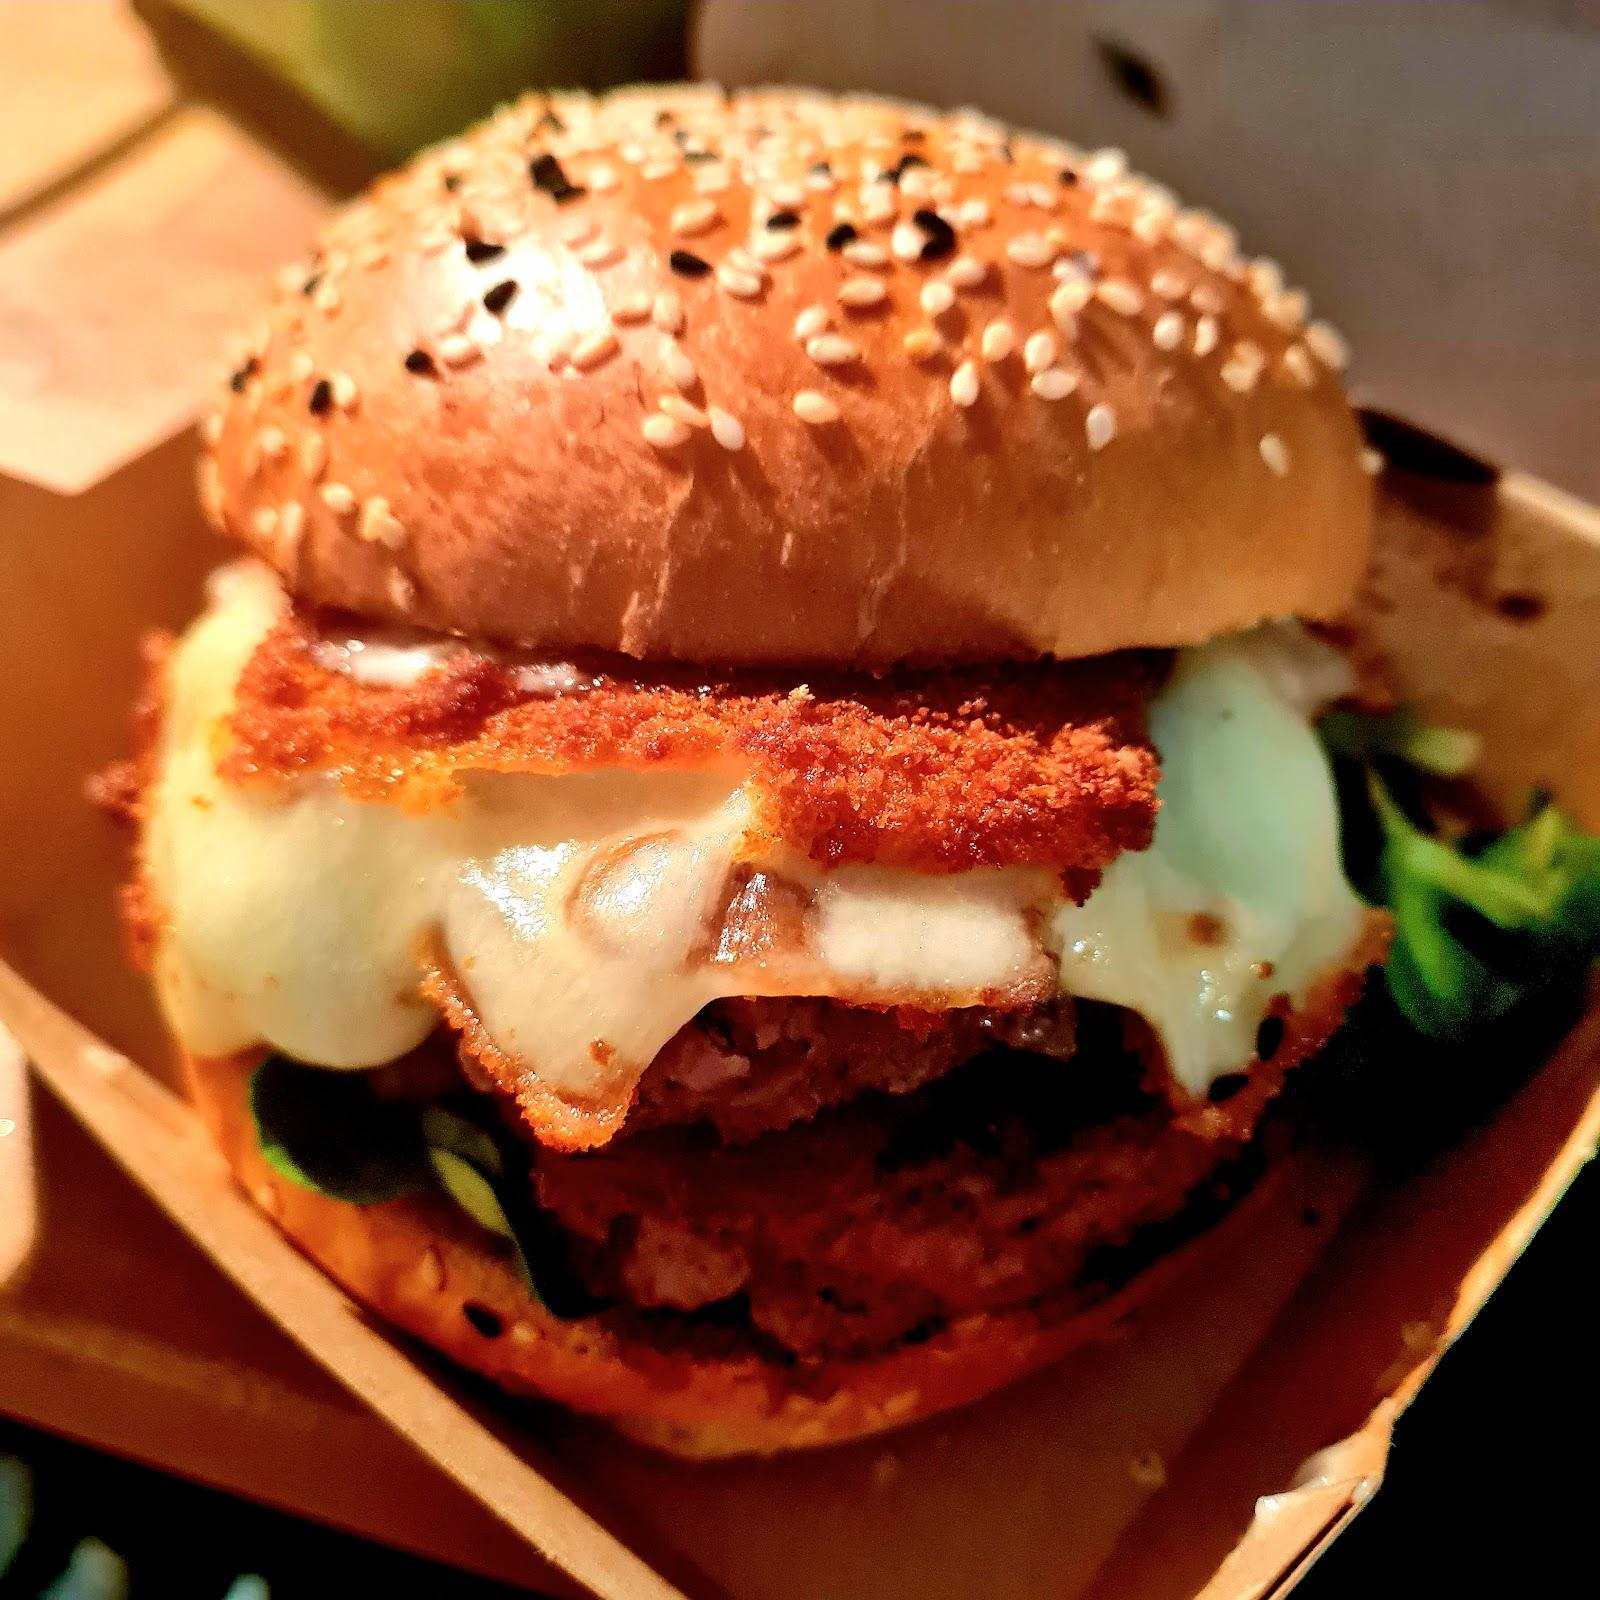 Restaurant "Burger me softly" in Berlin